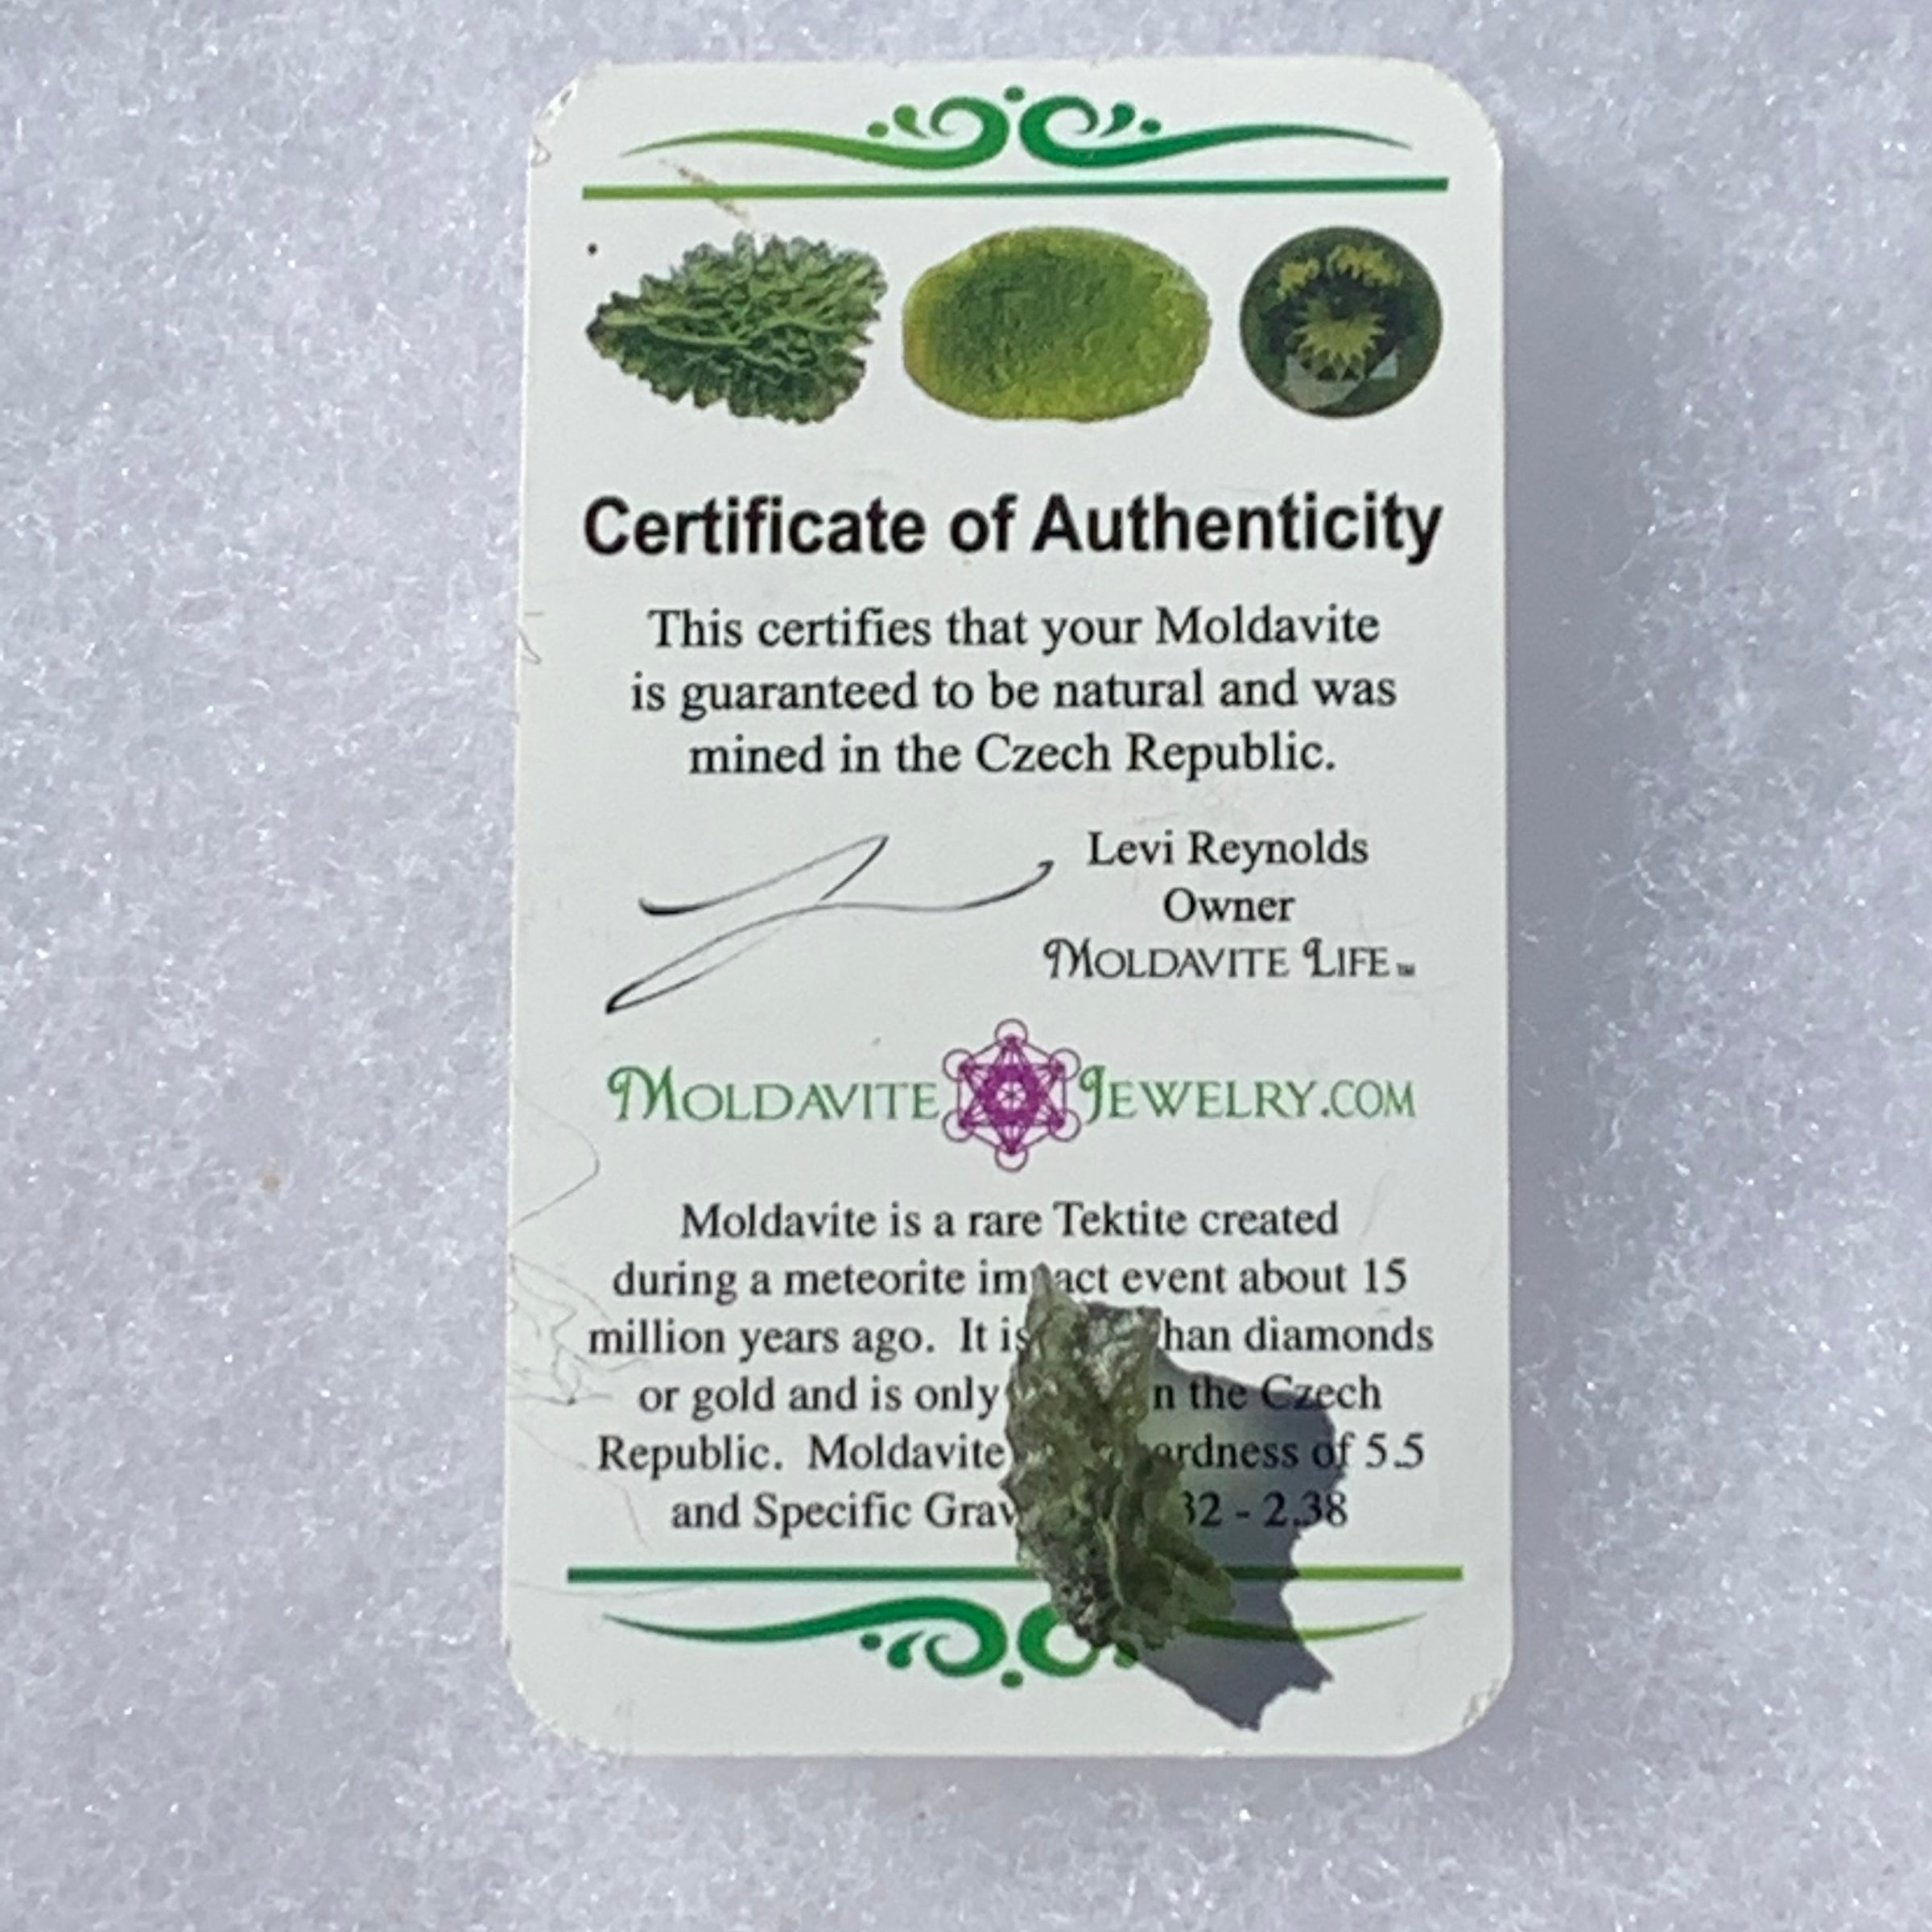 thin green besednice moldavite tektite with a moldavite life certificate of authenticity